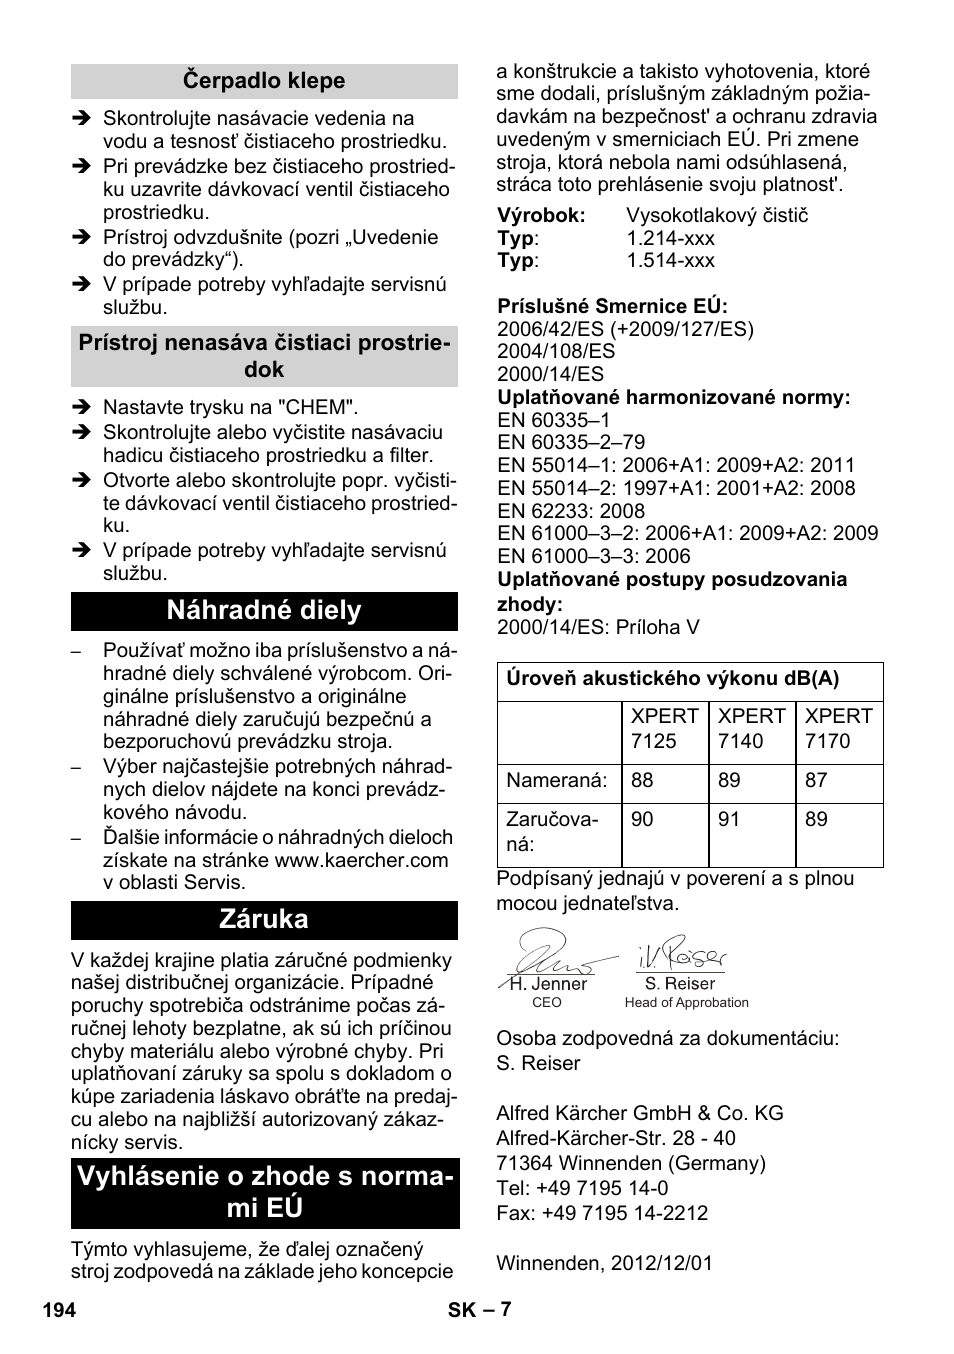 Karcher Xpert HD 7140 X User Manual | Page 194 / 276 | Original mode | Also  for: Xpert HD 7125, Xpert HD 7170, Xpert HD 7140, Xpert HD 7125 X